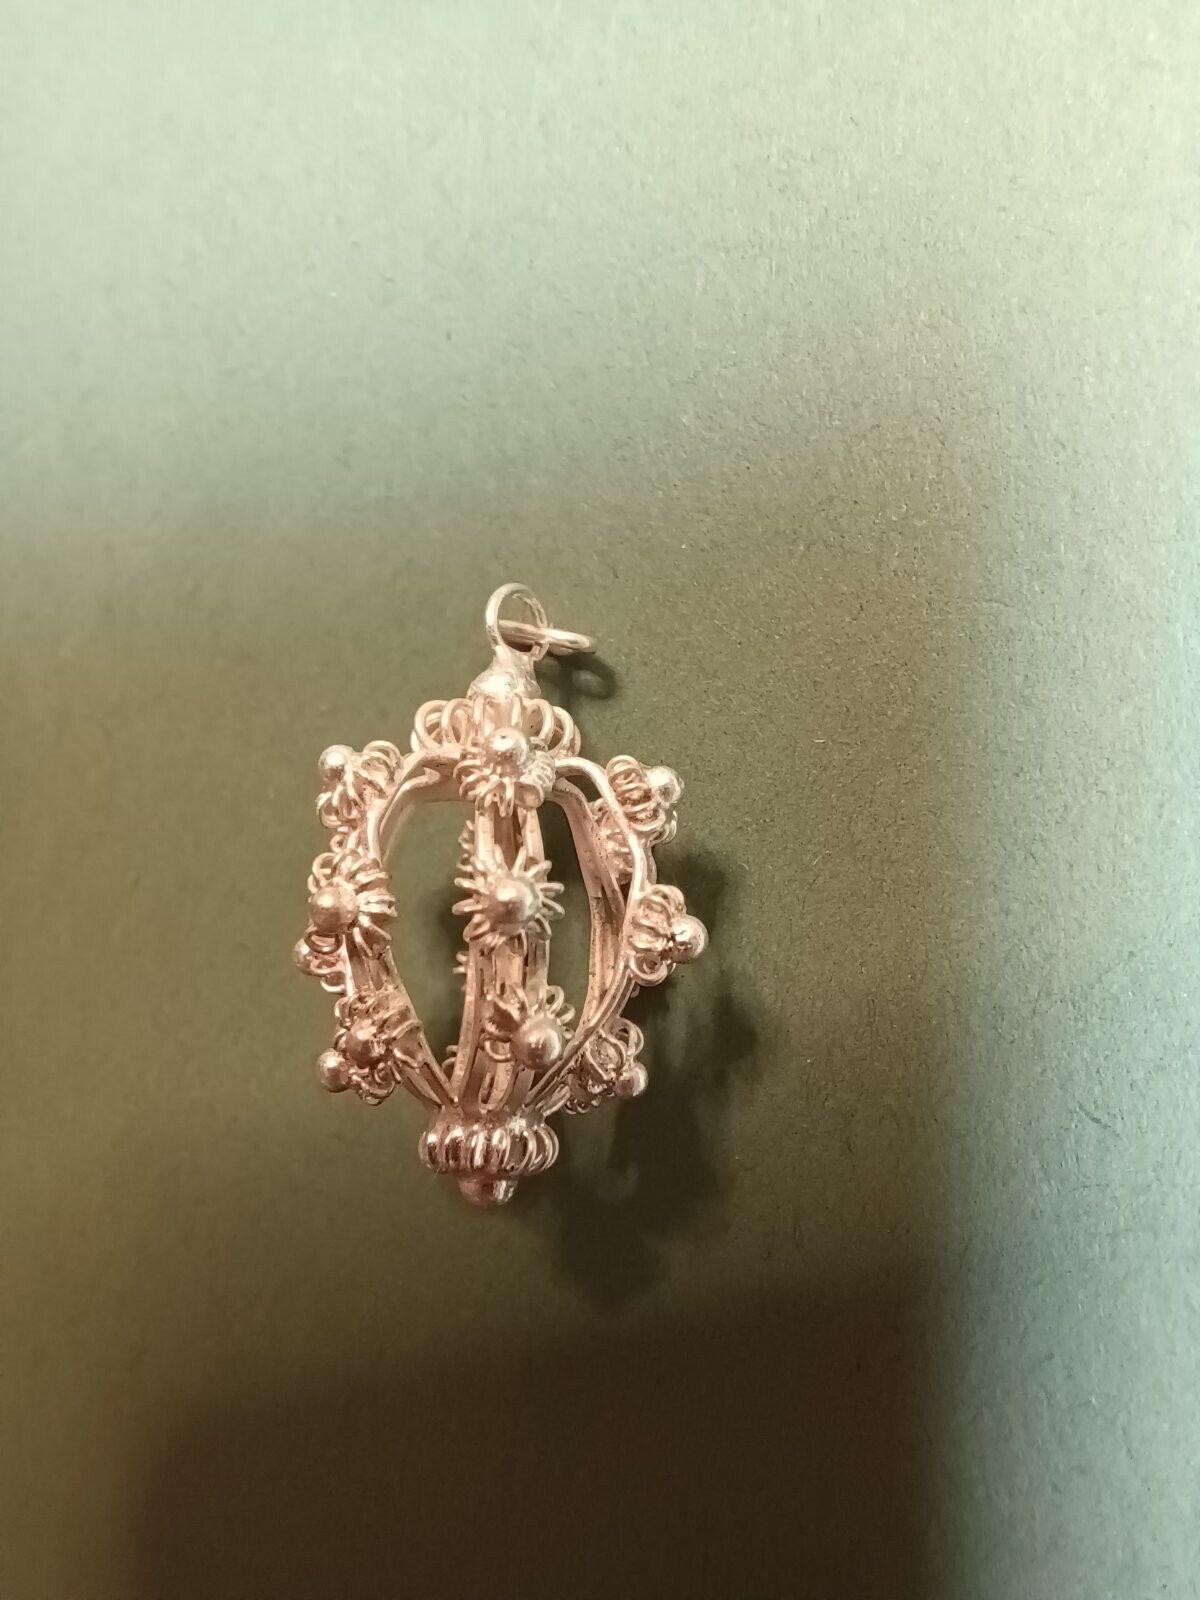 Antique handmade silver pendant, rare, 1,49 grams - image 2